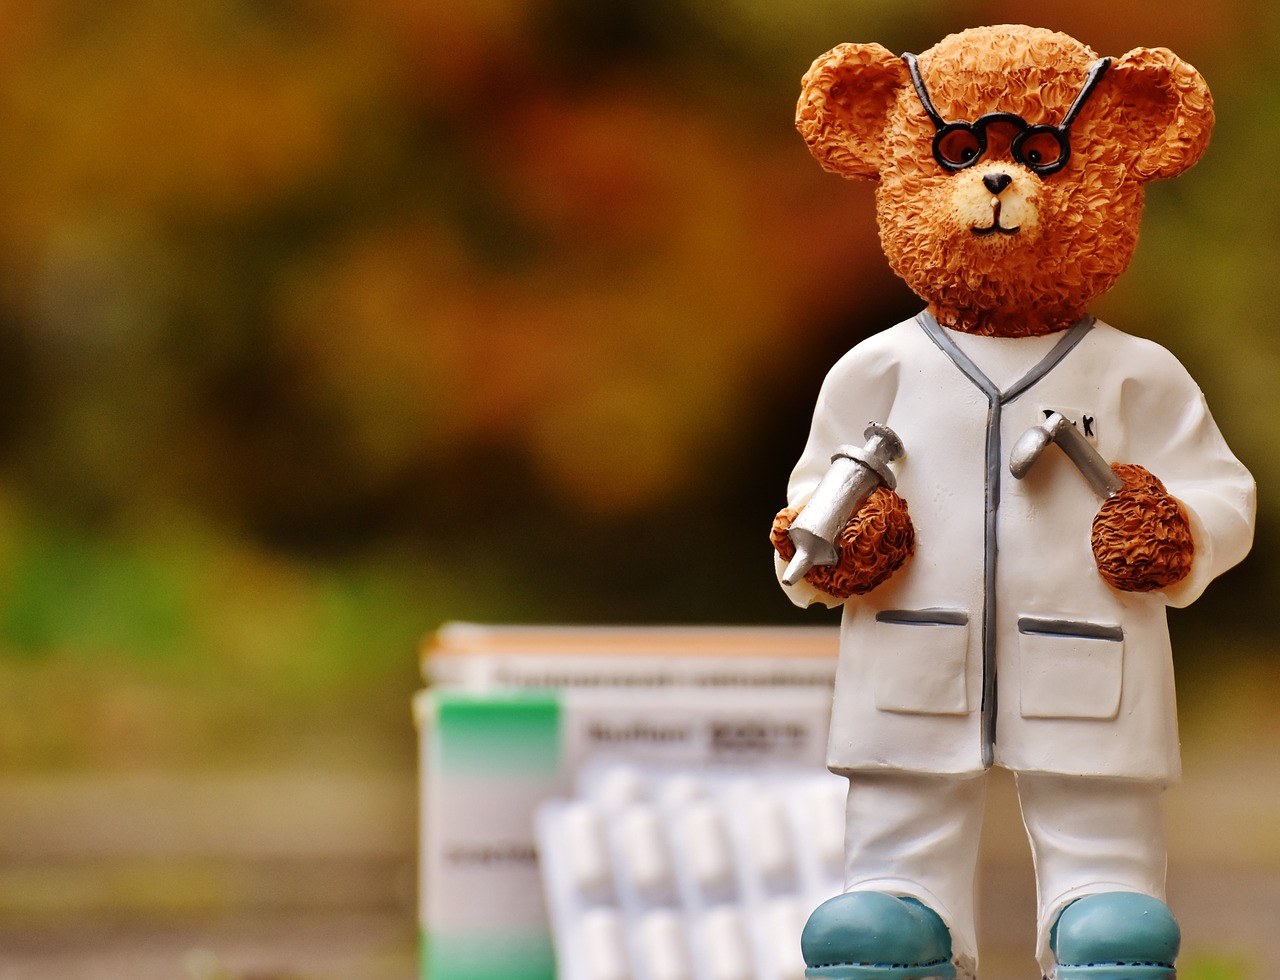 https://pixabay.com/photos/bear-profession-doctor-figure-cute-1821463/